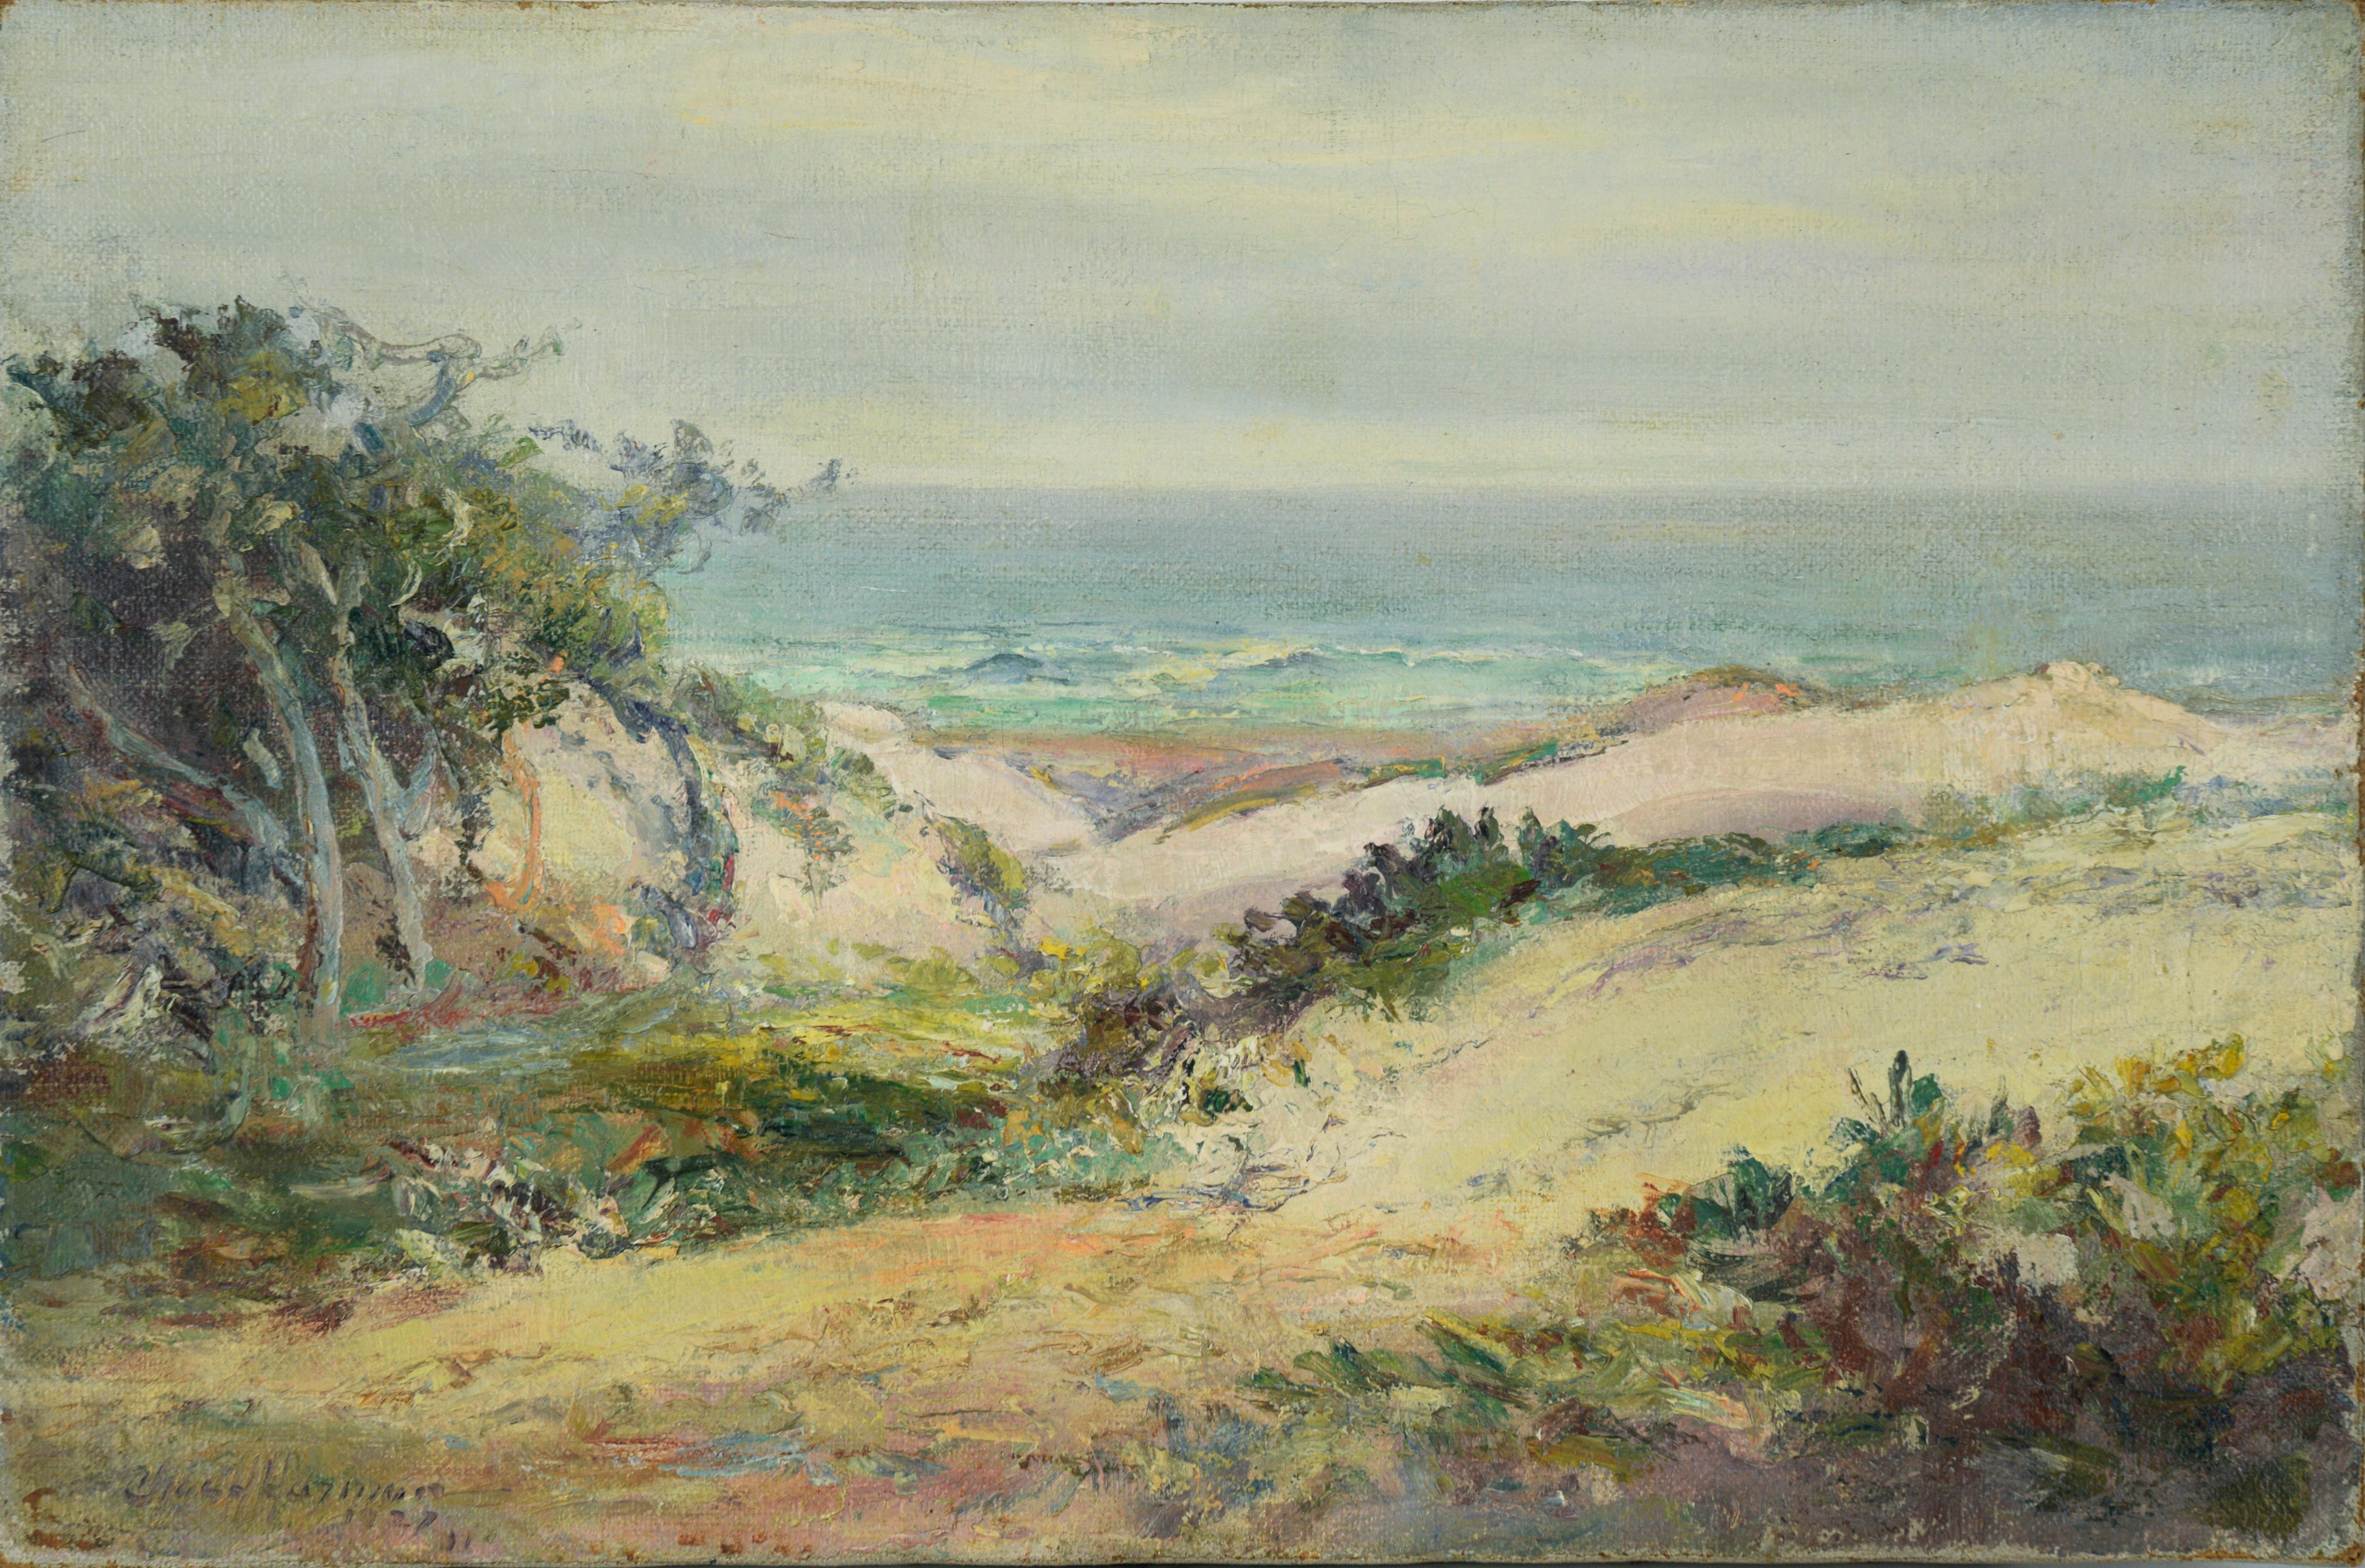 Landscape Painting Charles Harmon - Carmel by the Sea - Beach, California Coastline - Huile sur lin, 1927